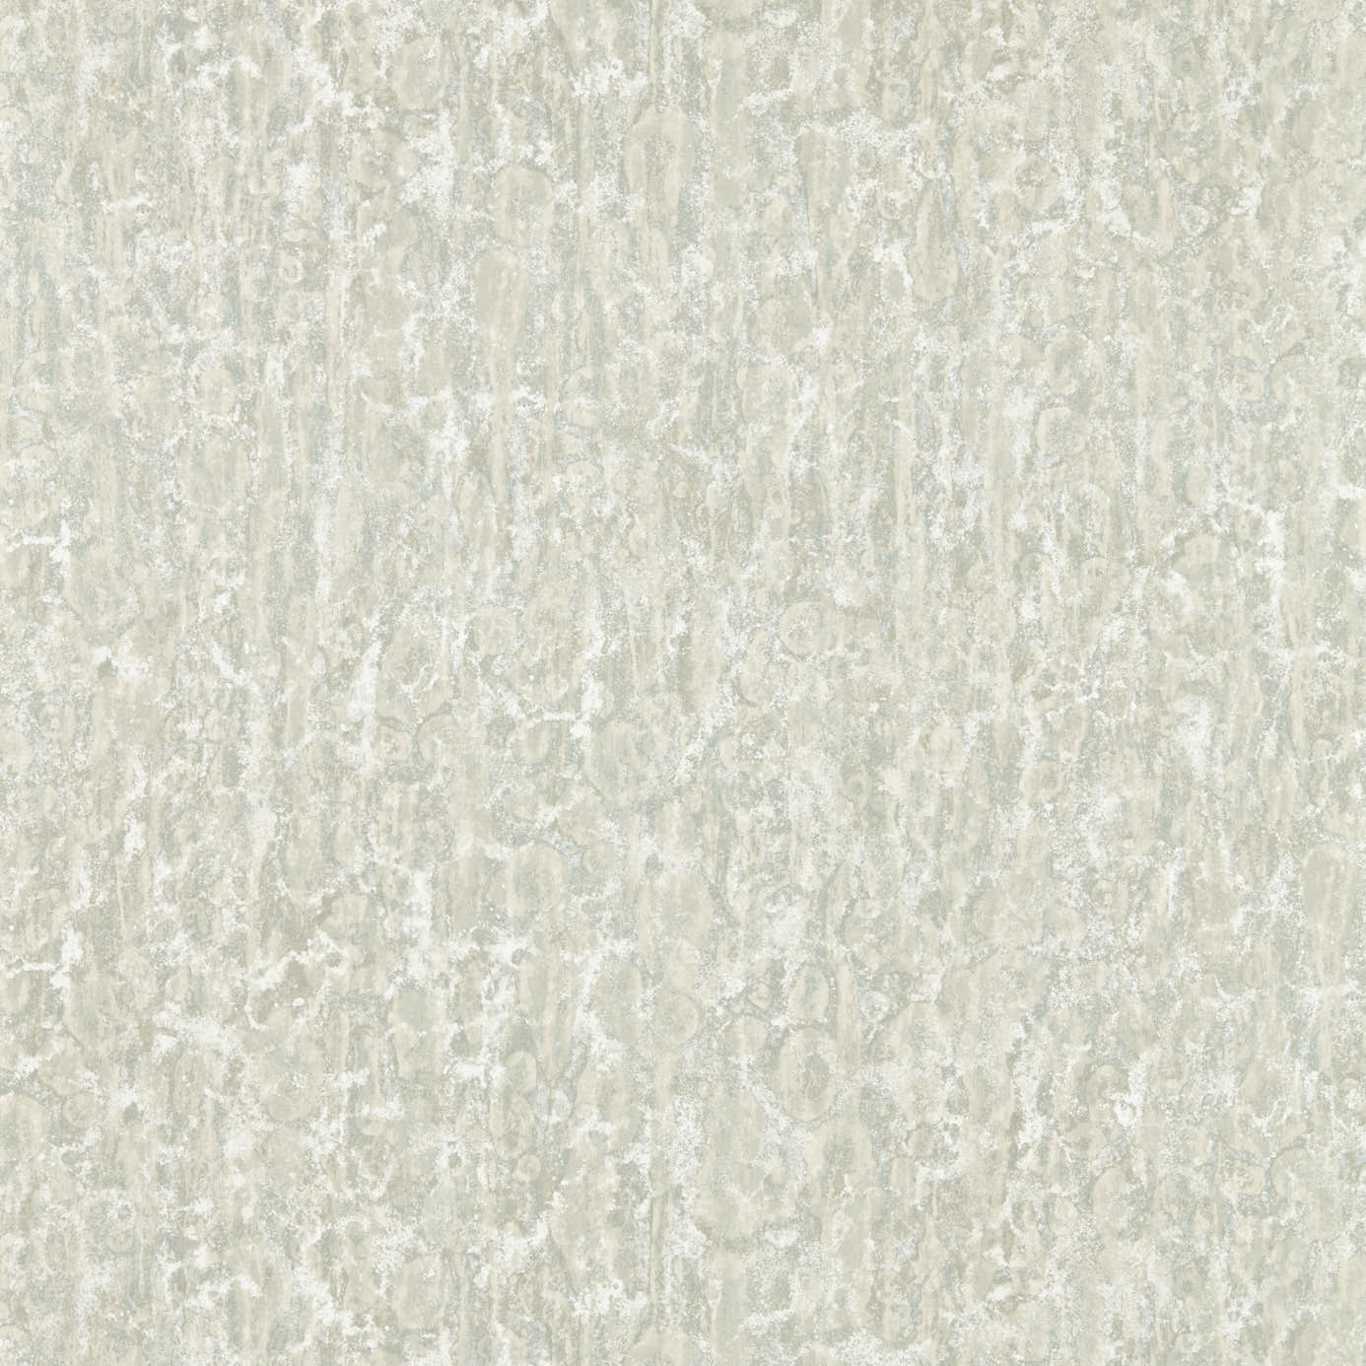 Moresque Glaze Mineral Wallpaper by ZOF